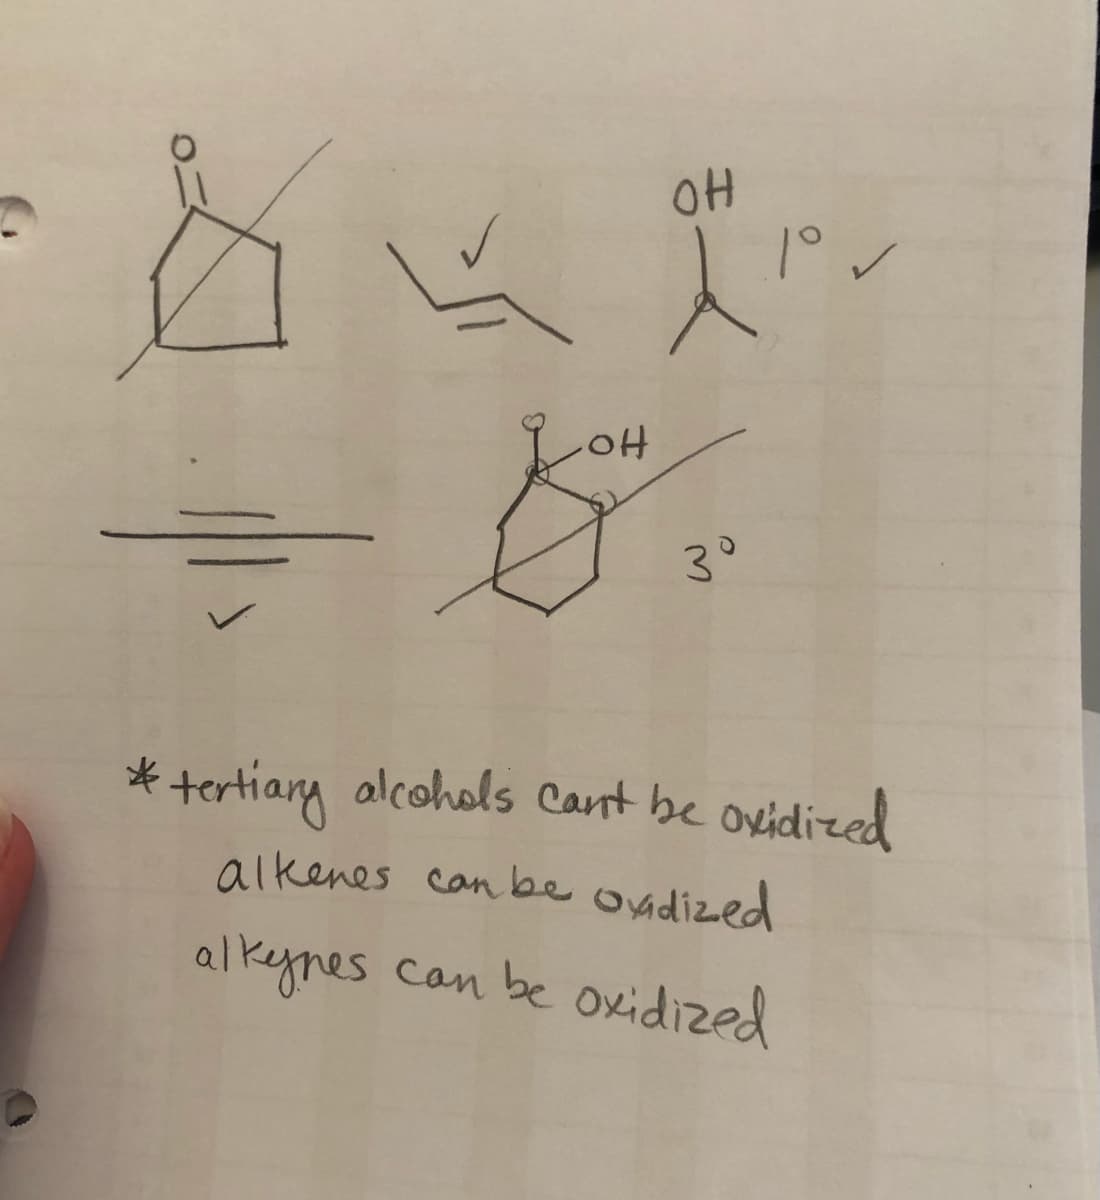 30
*tertiary alcohols Cant be oveidized
alkenes can be ondized
al keynes can be oxidized
